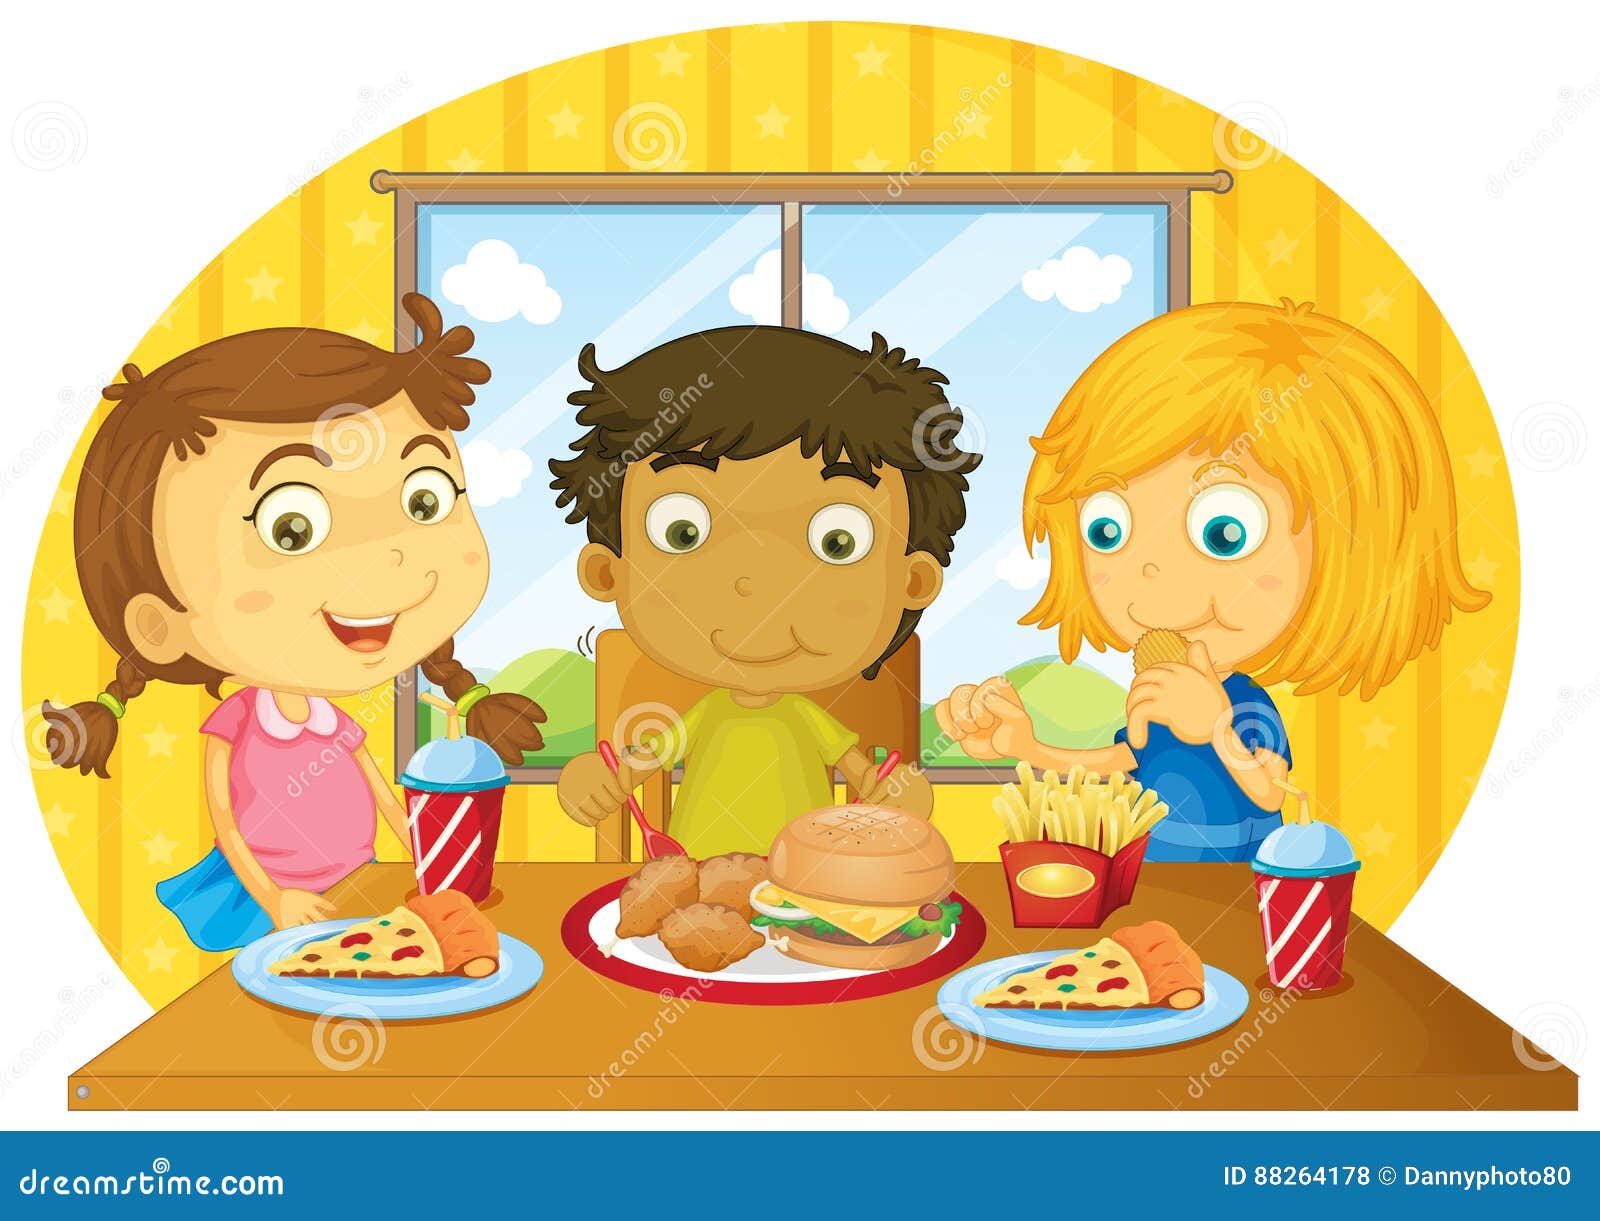 Плакат иллюстрация дети обедают